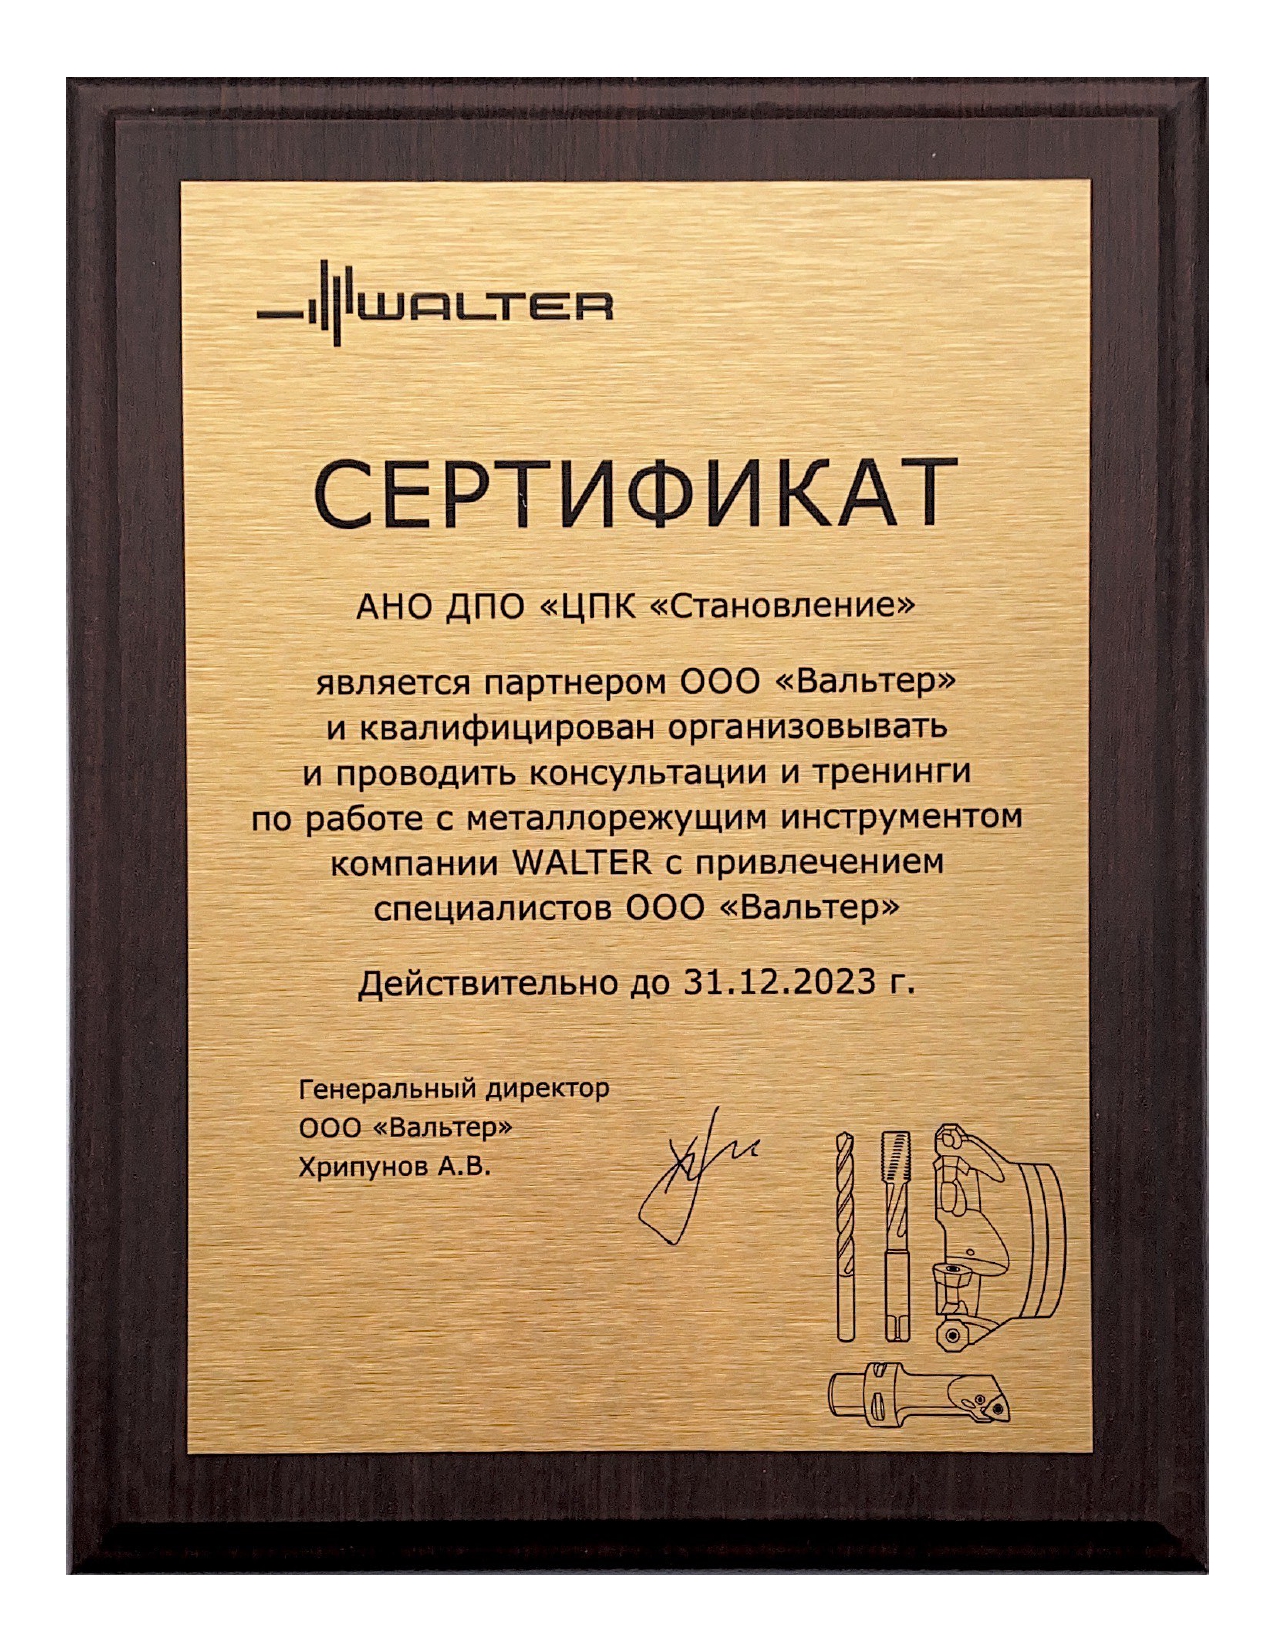 Сертификат компании Walter